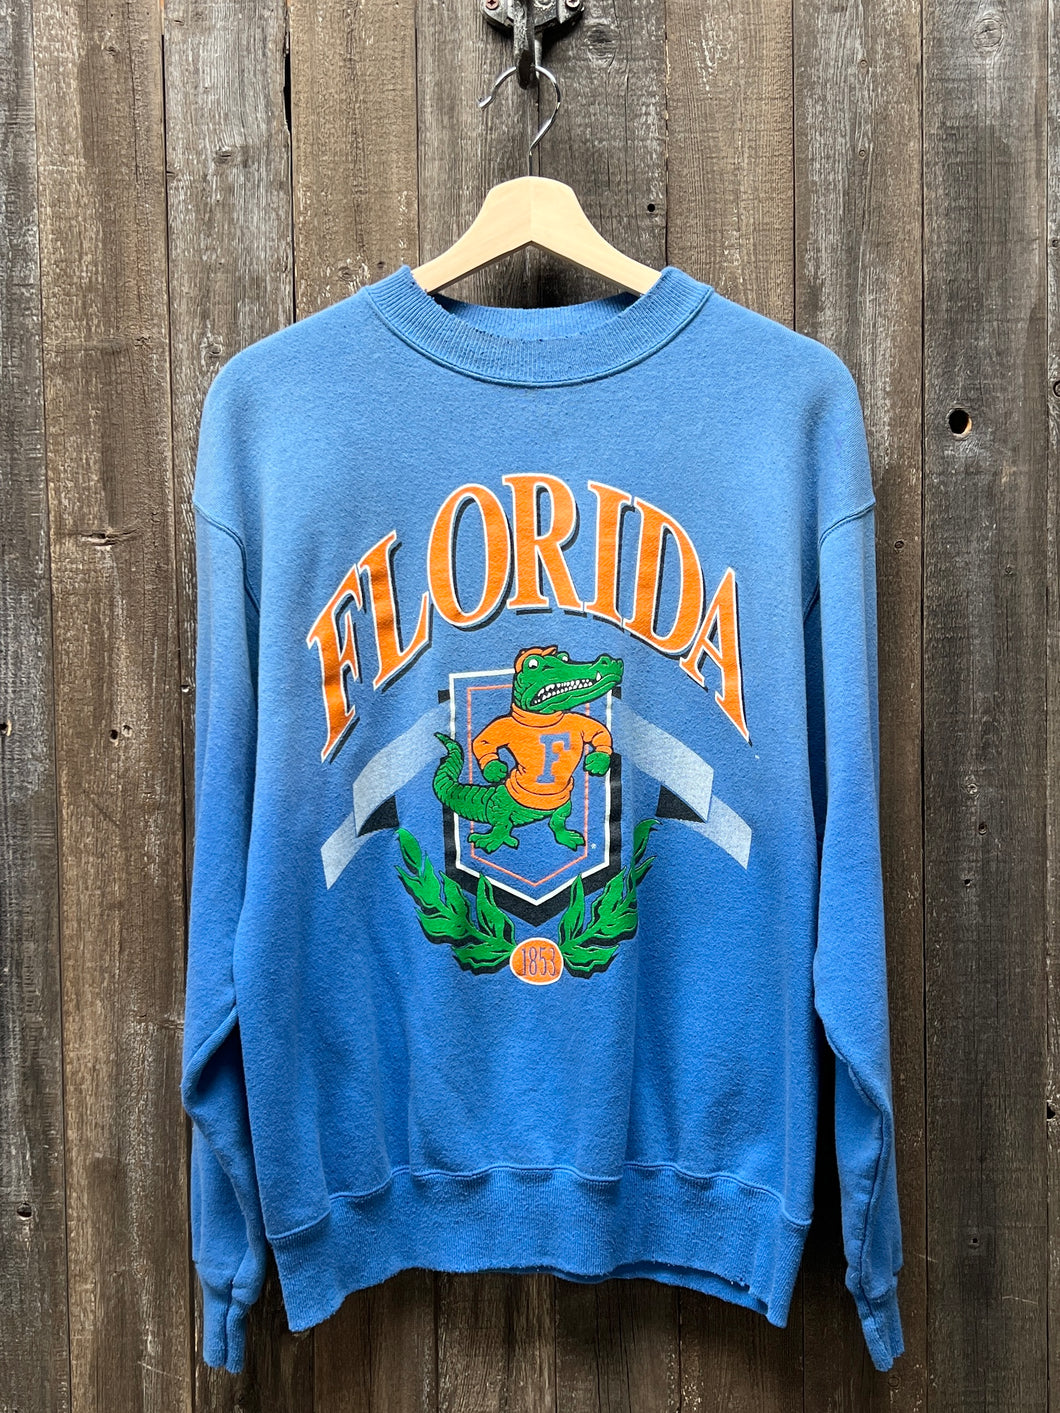 Florida Gators Sweatshirt -M-Customize Your Embroidery Wording